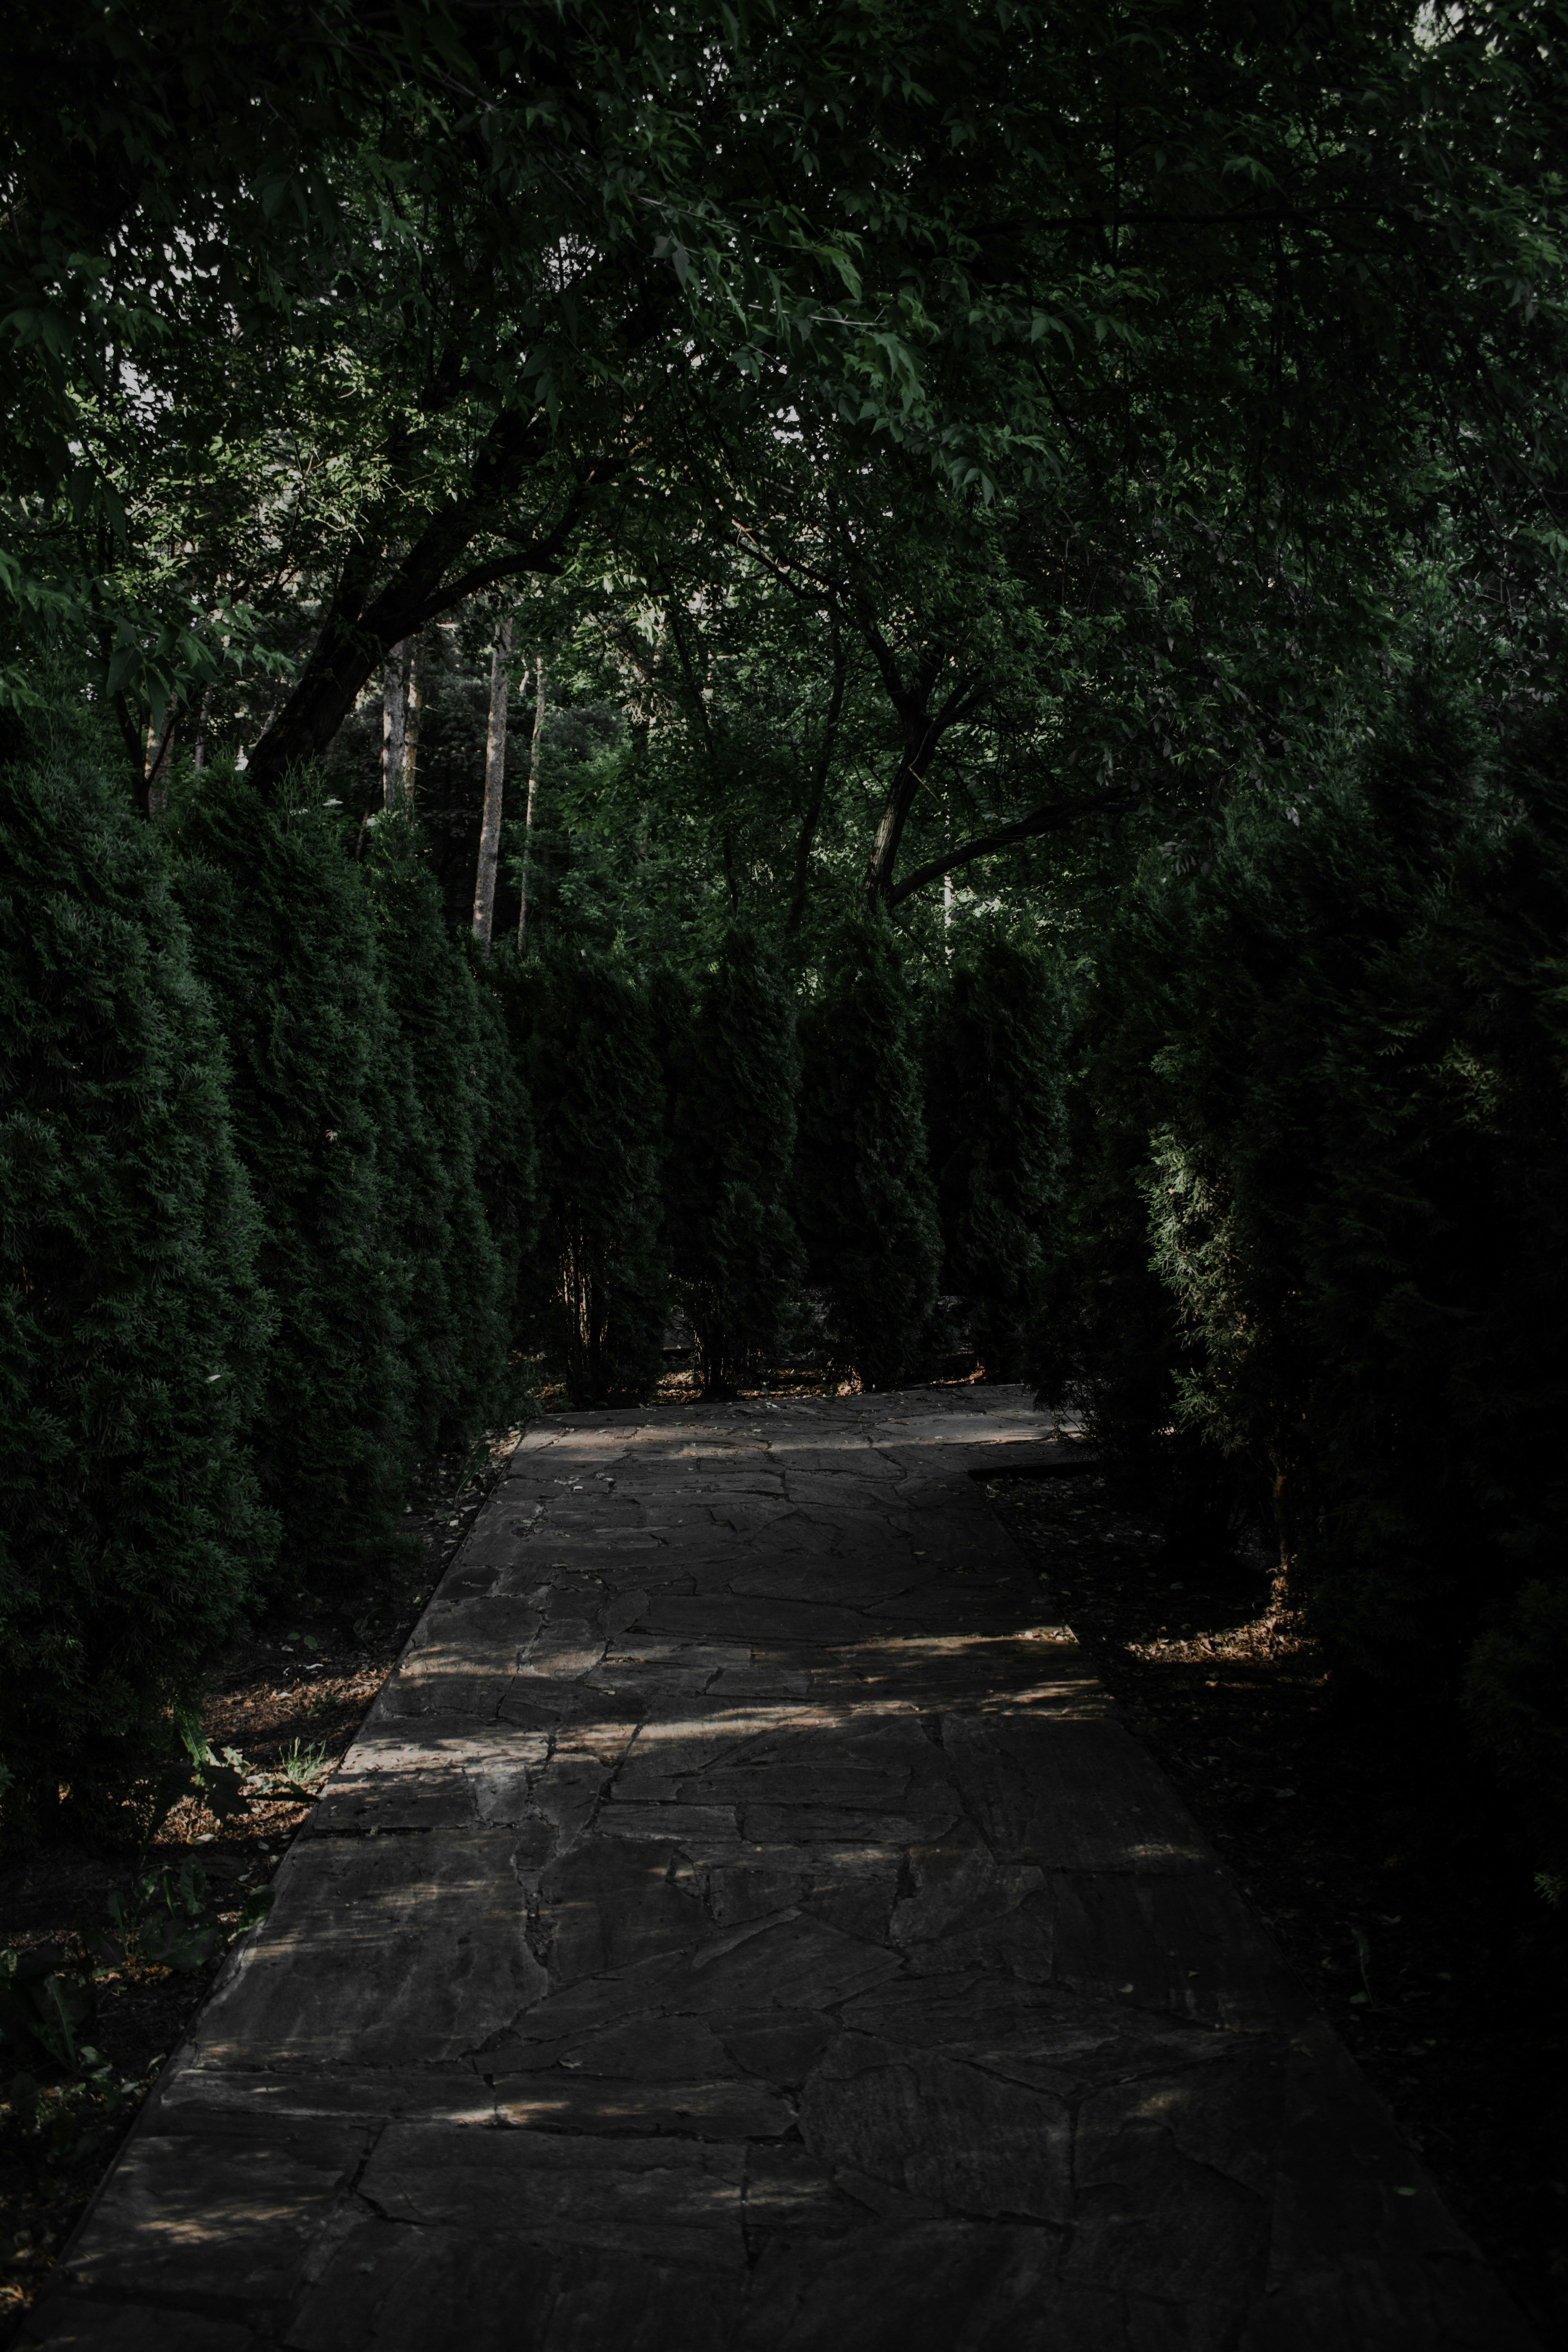 gray concrete pathway between green trees